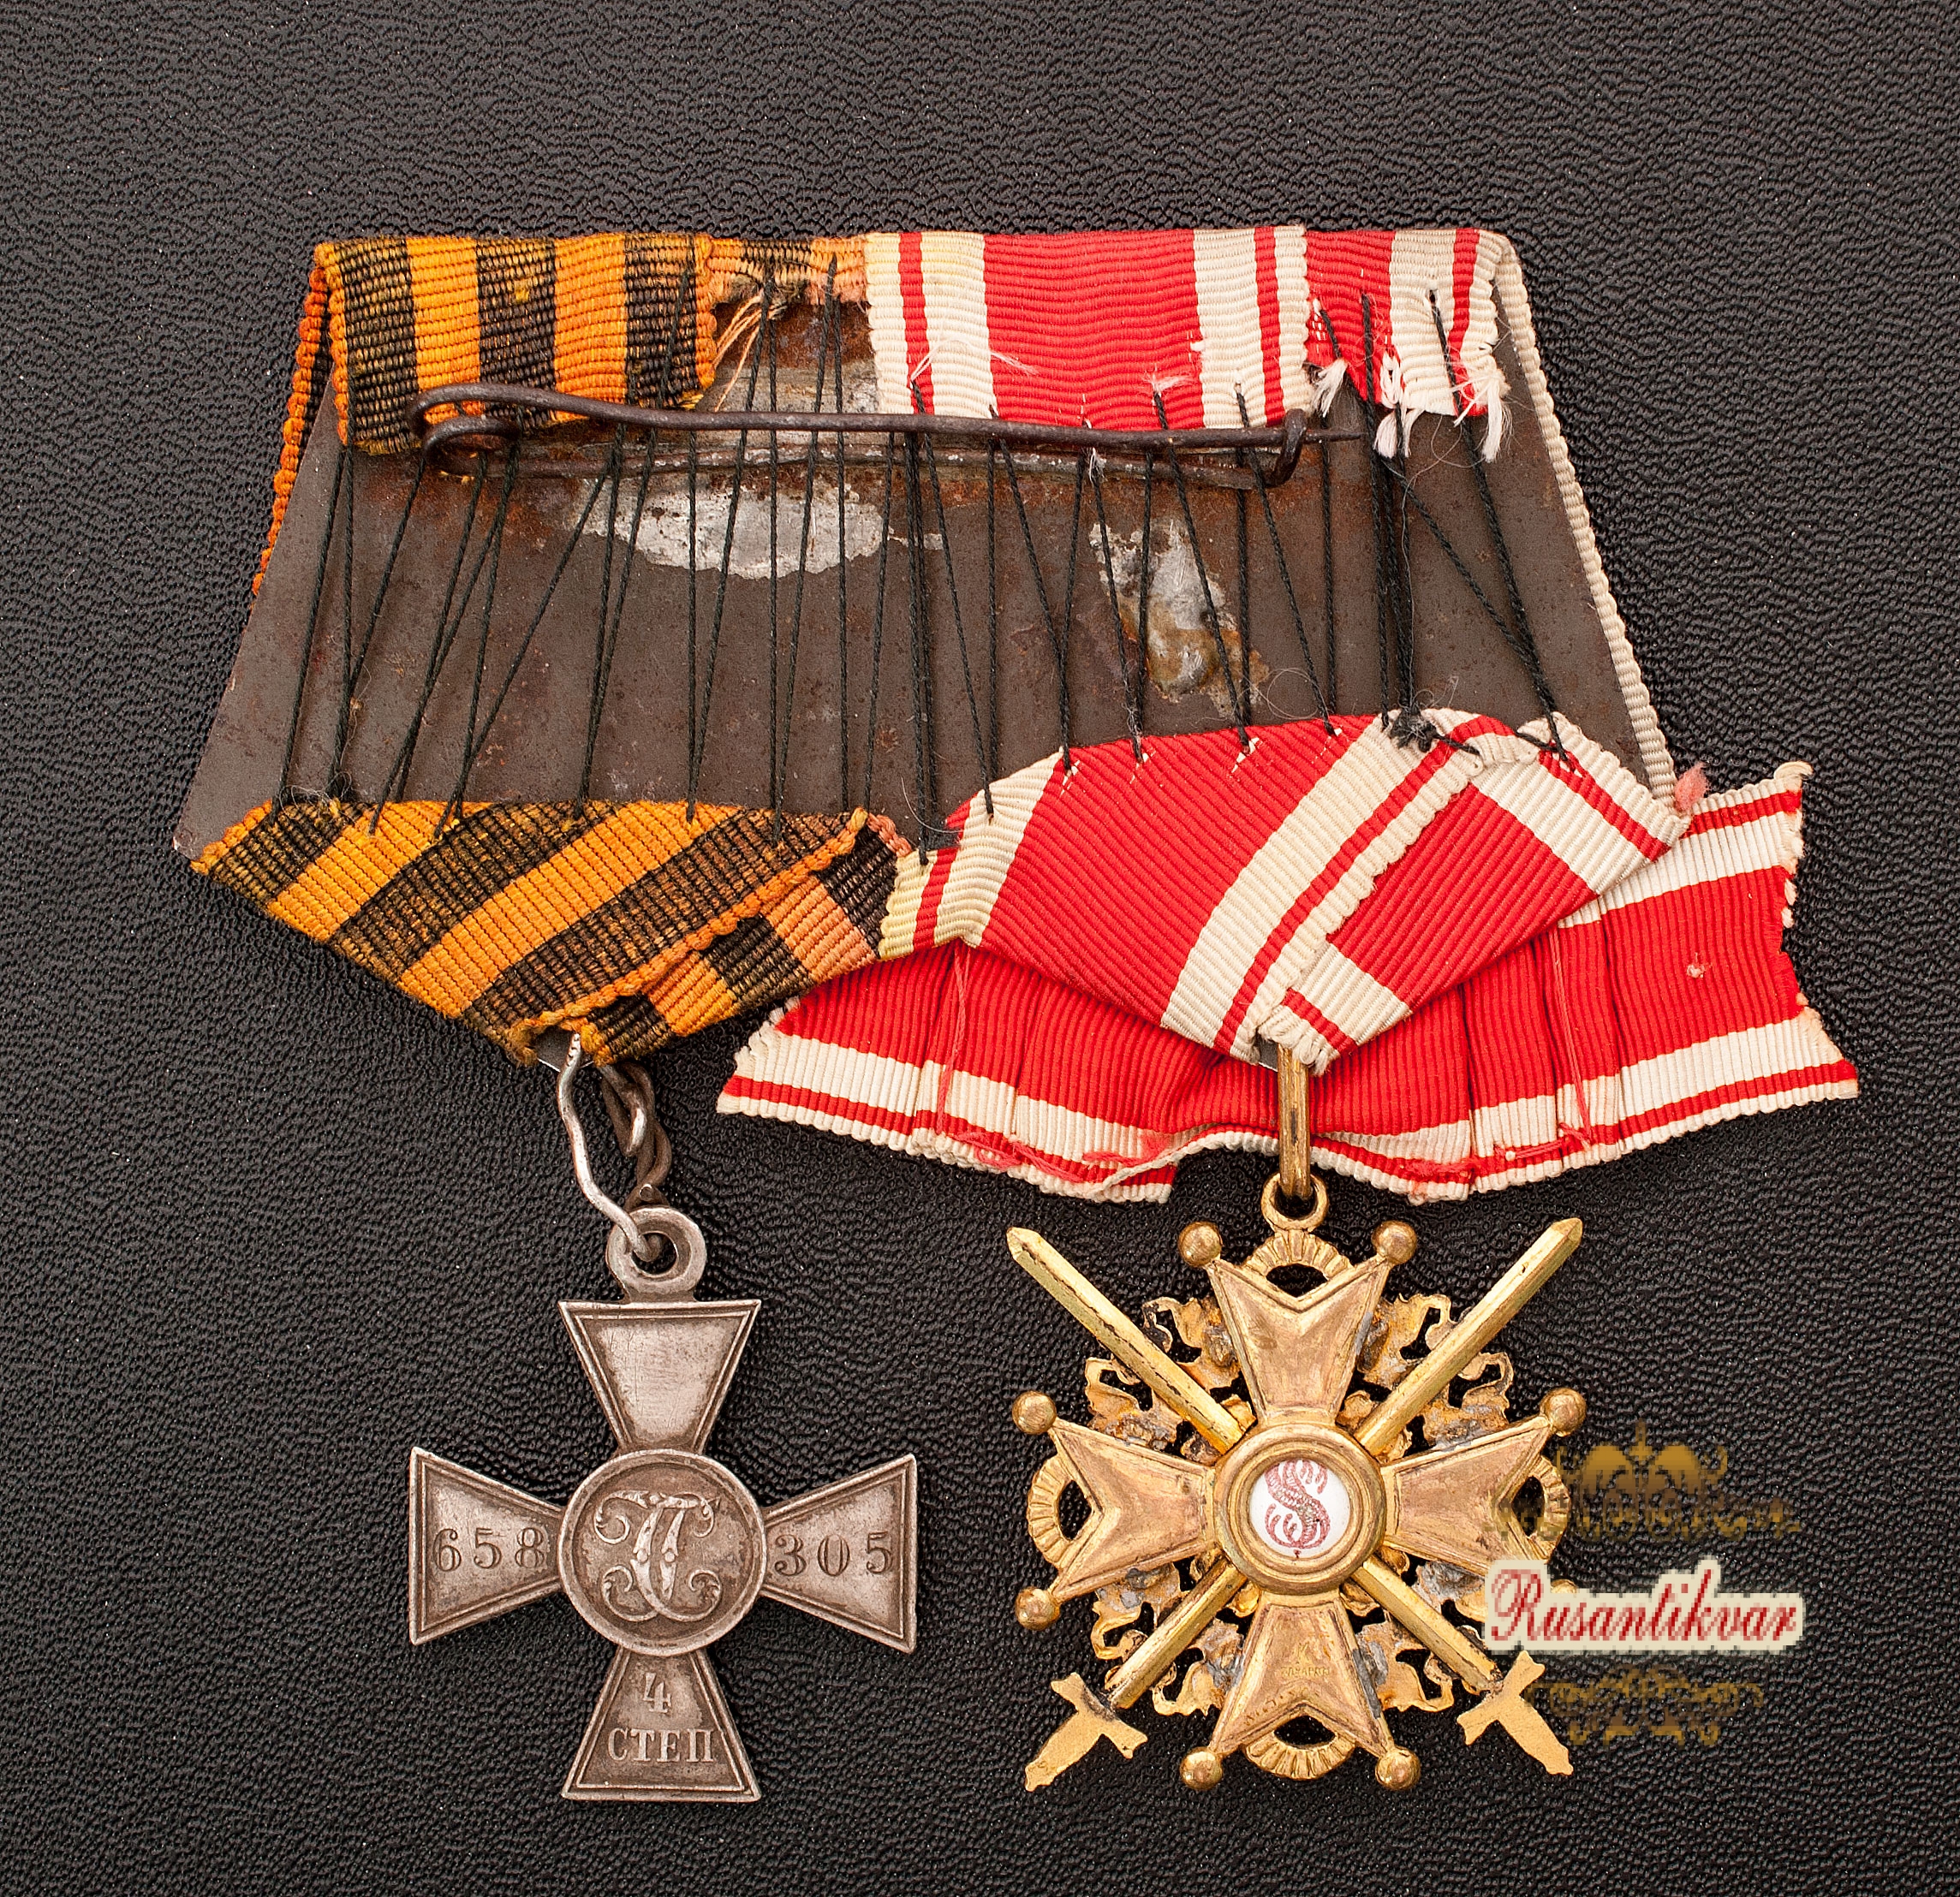 Колодка Орден Святого Станислава 3 степени с мечами и Георгиевский крест 4 степени №658305